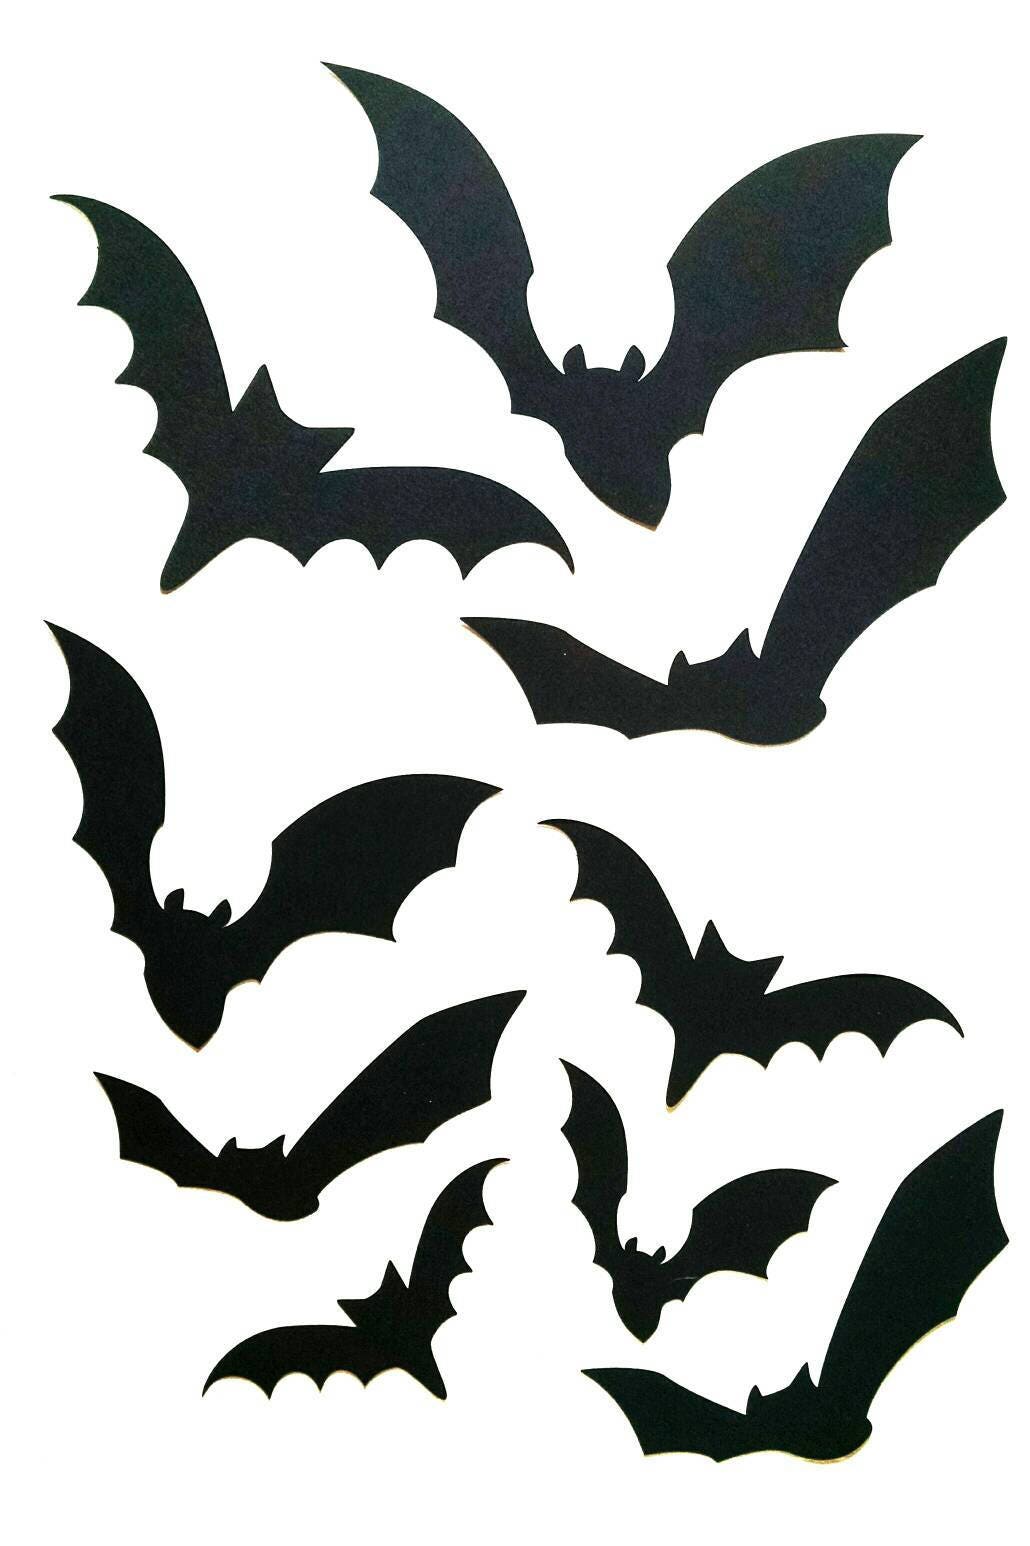 Bat Silhouette 1